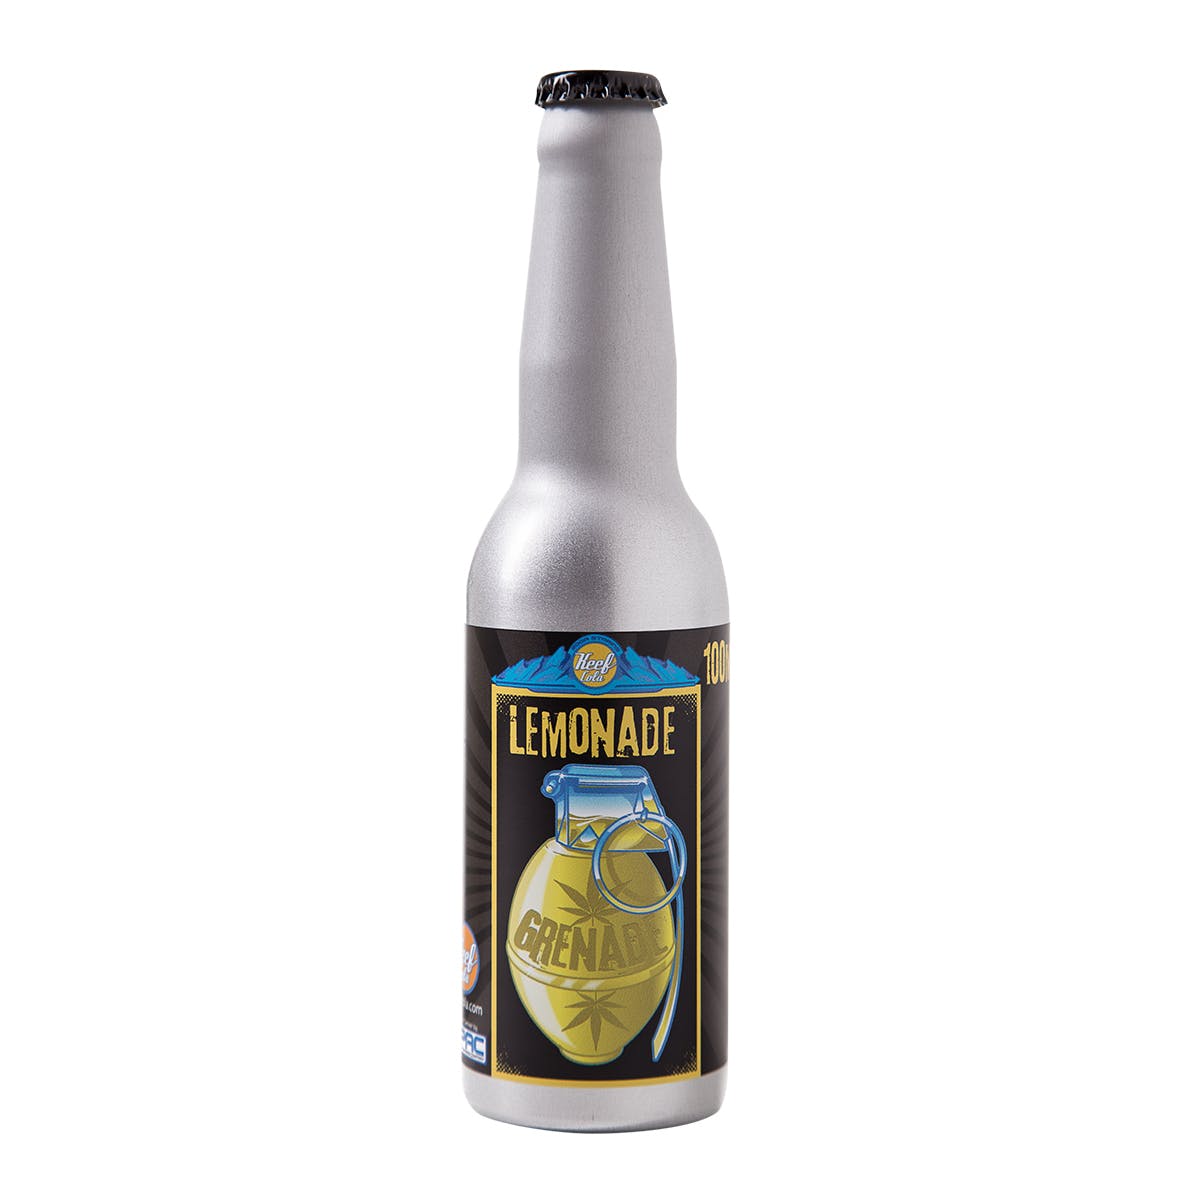 Lemonade Grenade (Seasonal), 100mg MED